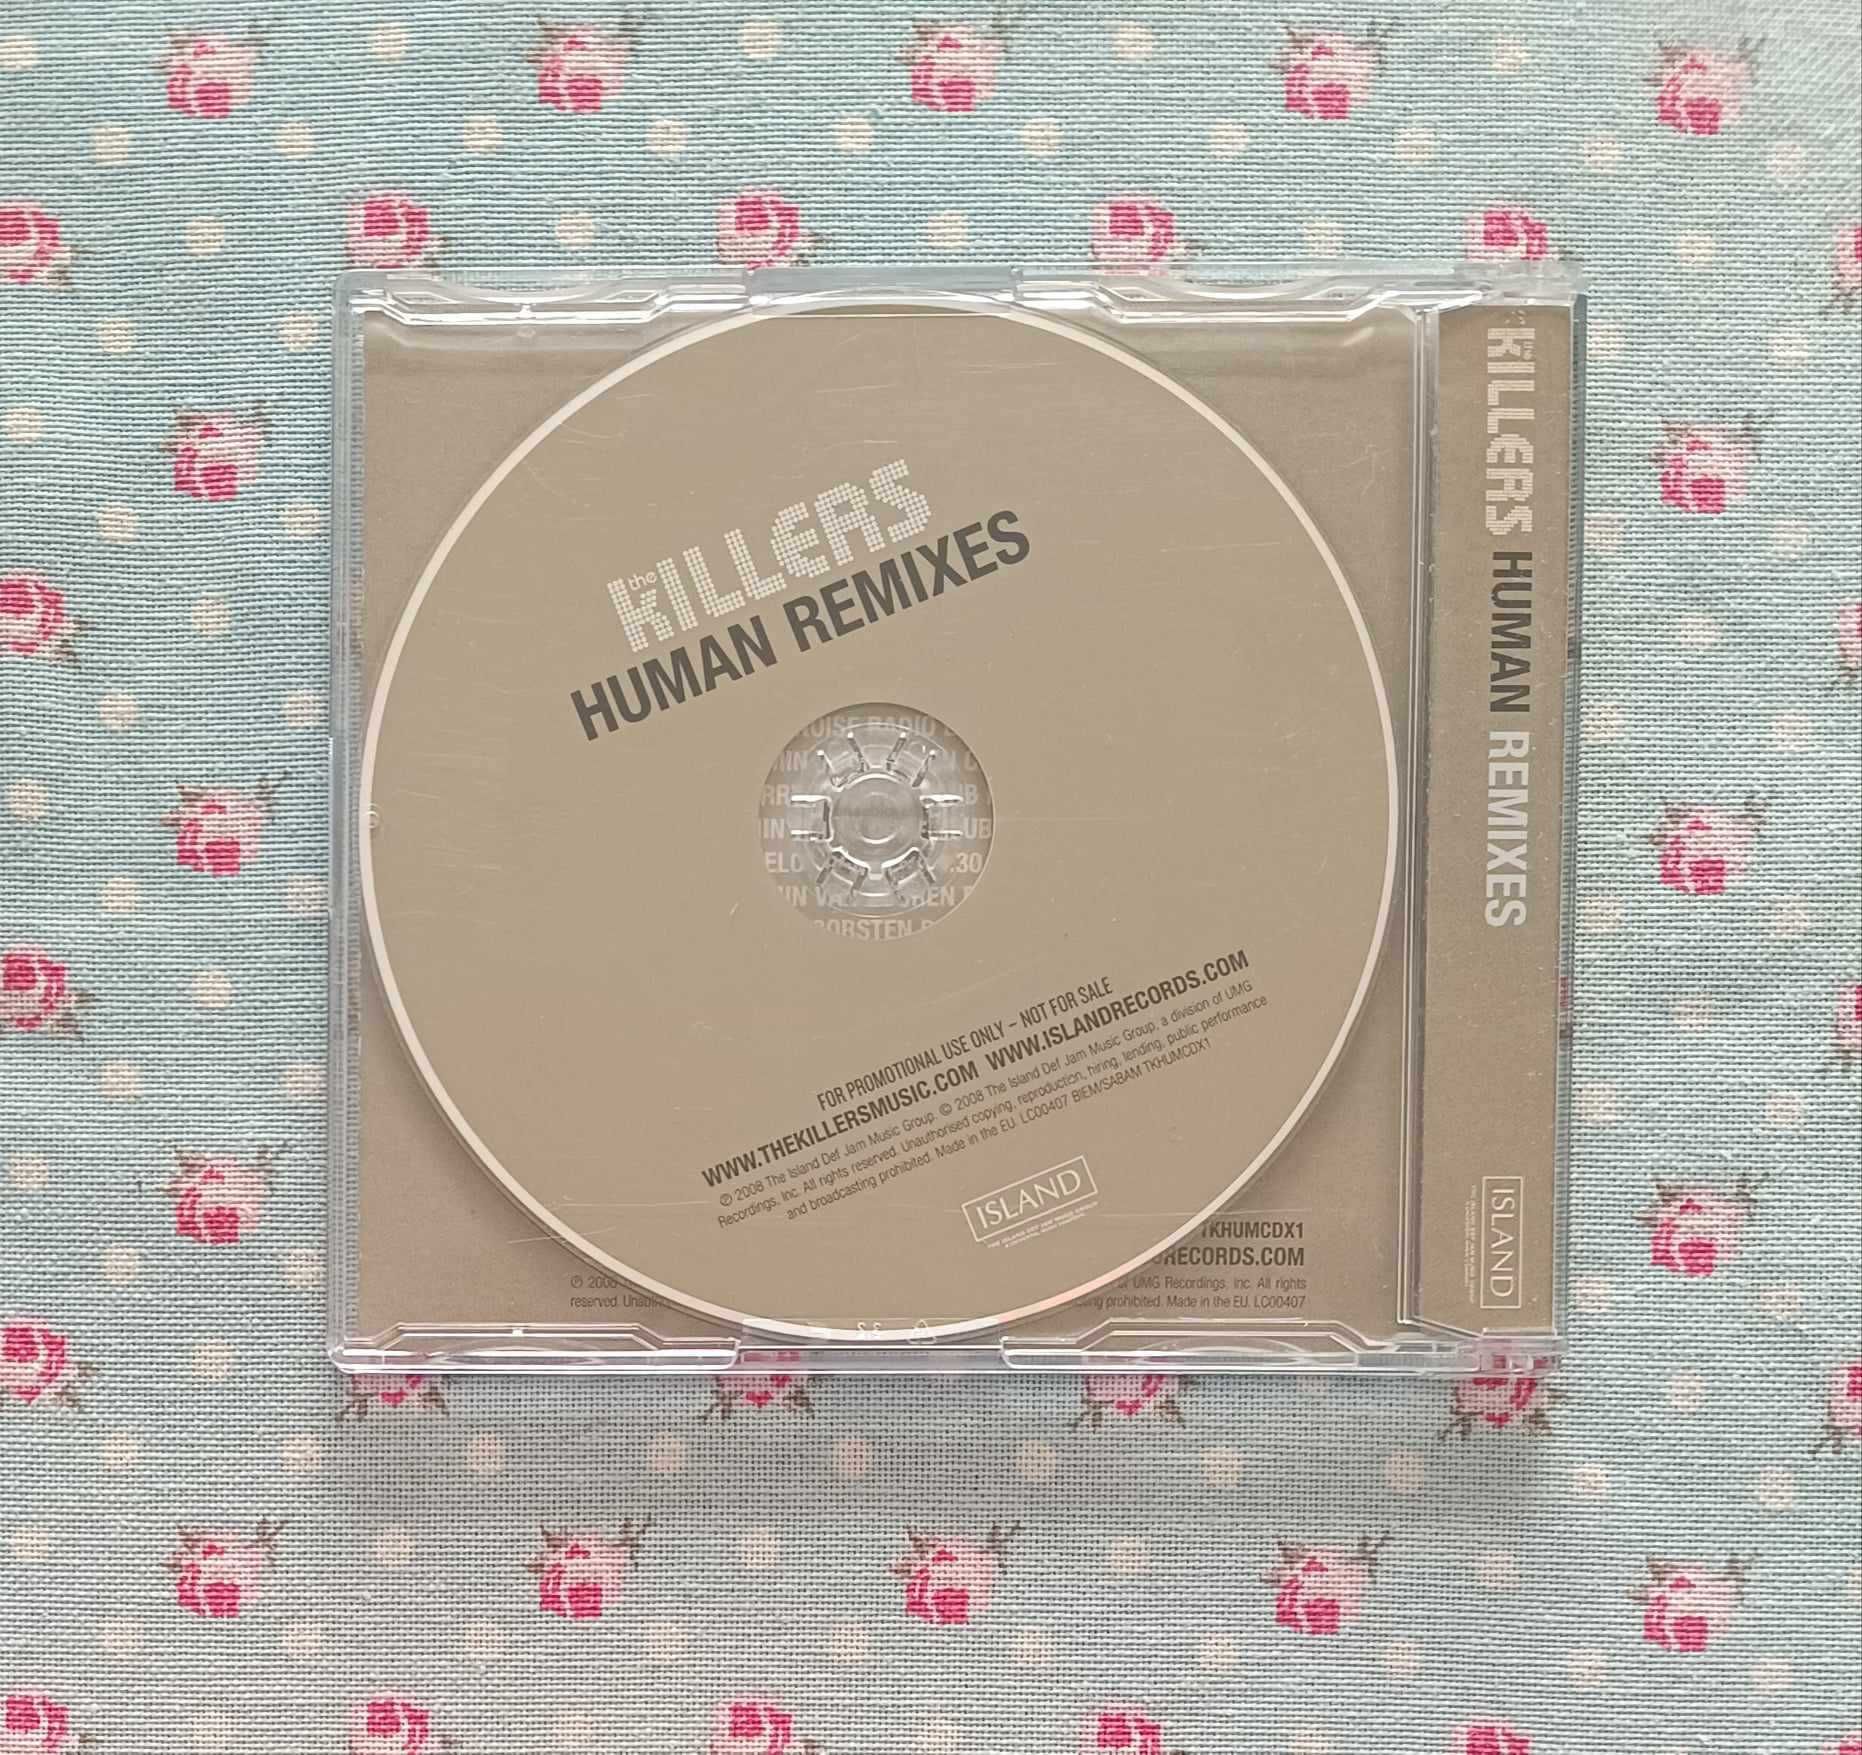 CD The Killers ‎– Human (Remixes) (2008) (Maxi-Single Promo)